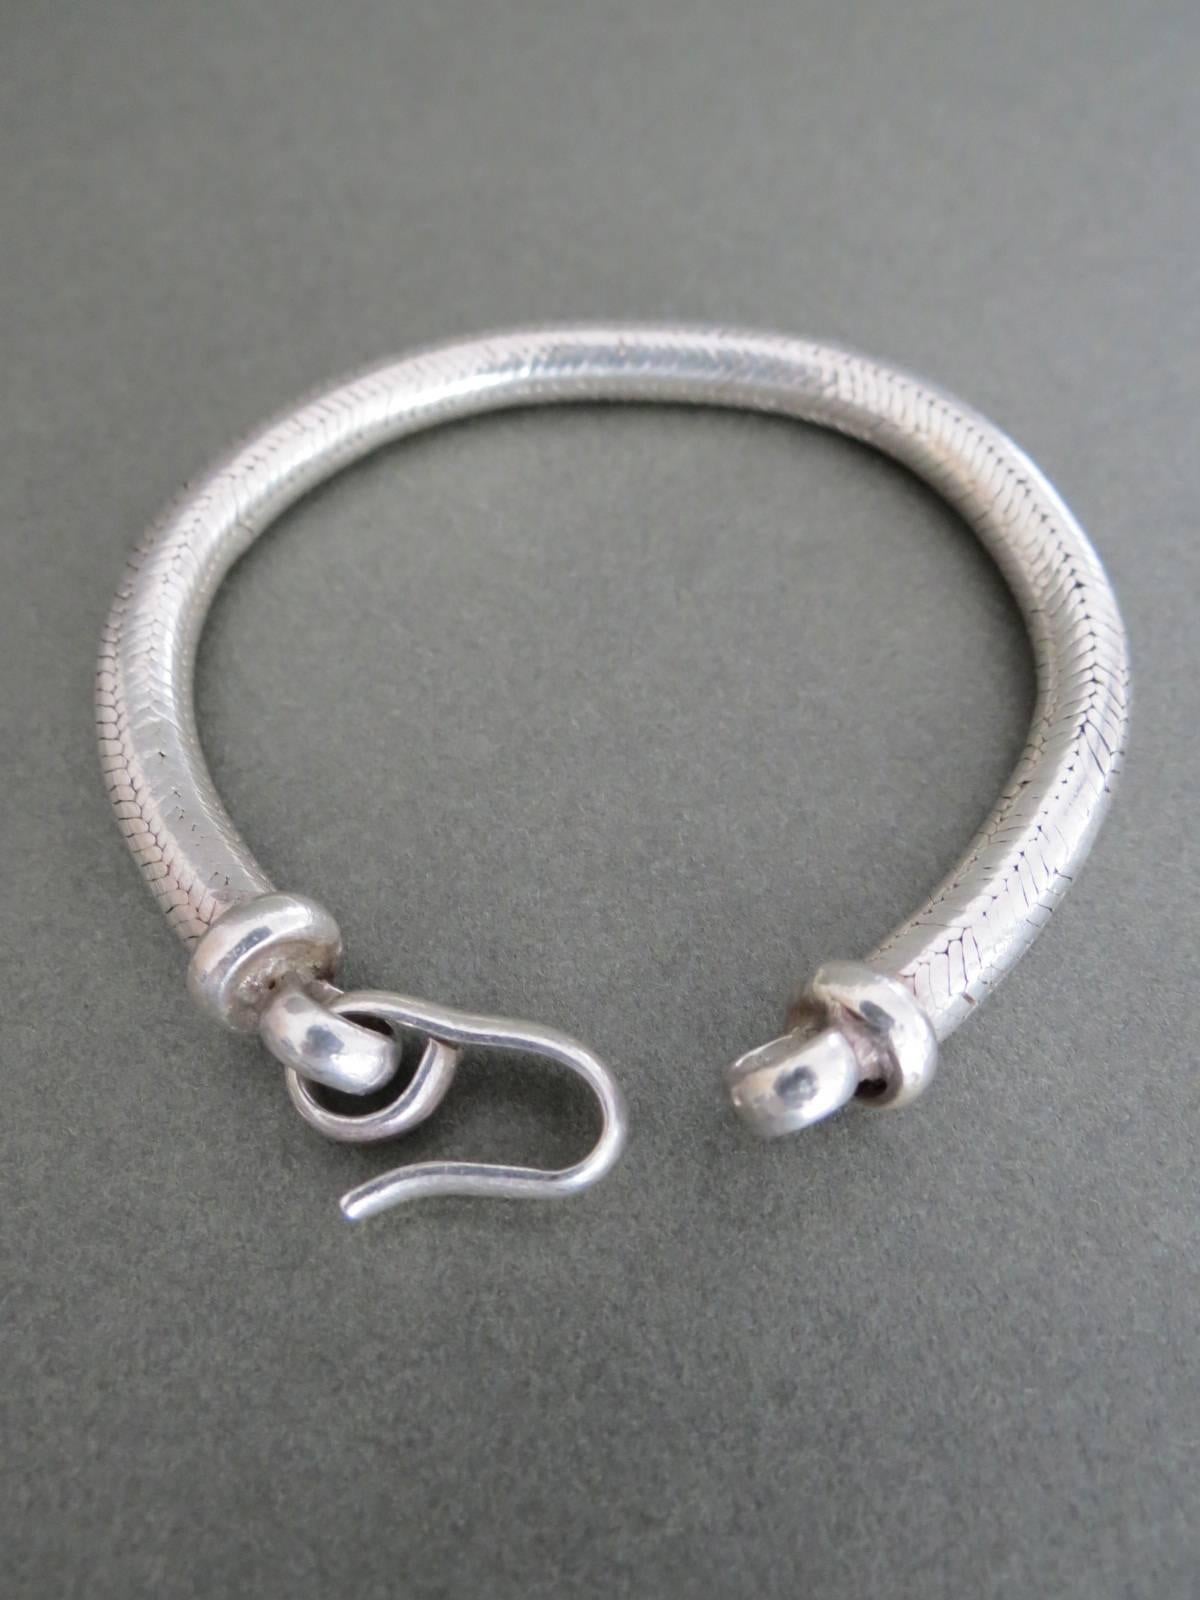 This is lovely Danish silver snakeskin large bracelet.
Item Specifics
Length: 19cm (approx 7.50